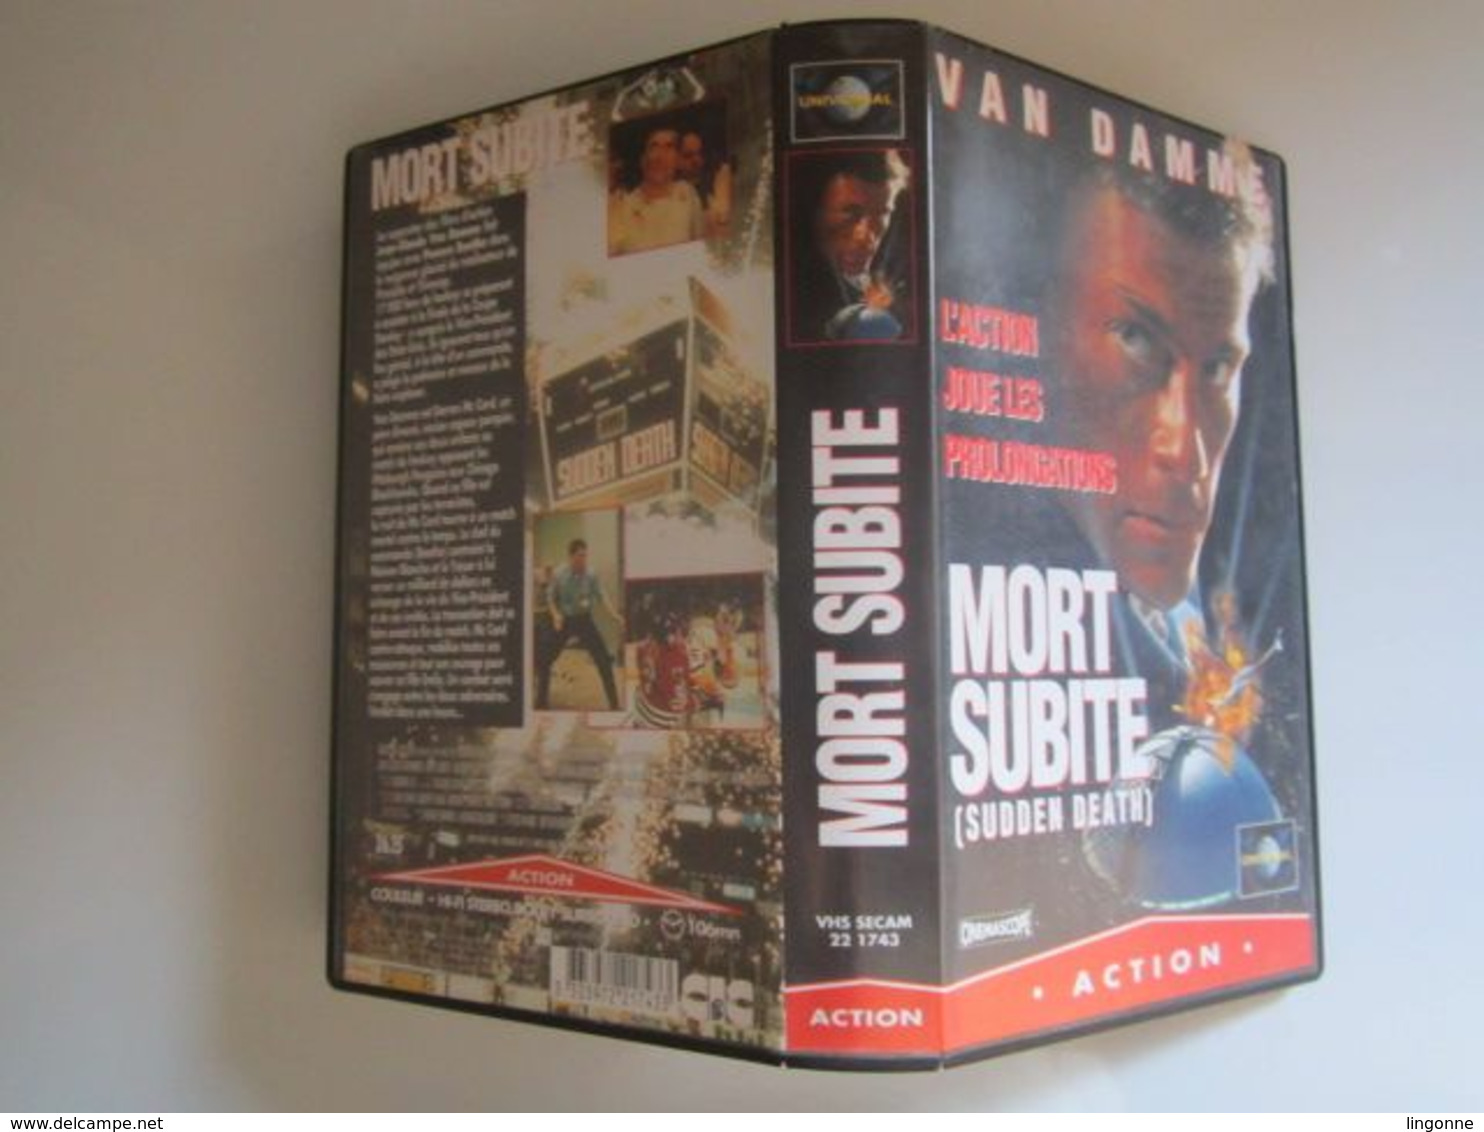 CASSETTE VIDEO VHS Van Damme – Mort Subite (Sudden Death) - Azione, Avventura